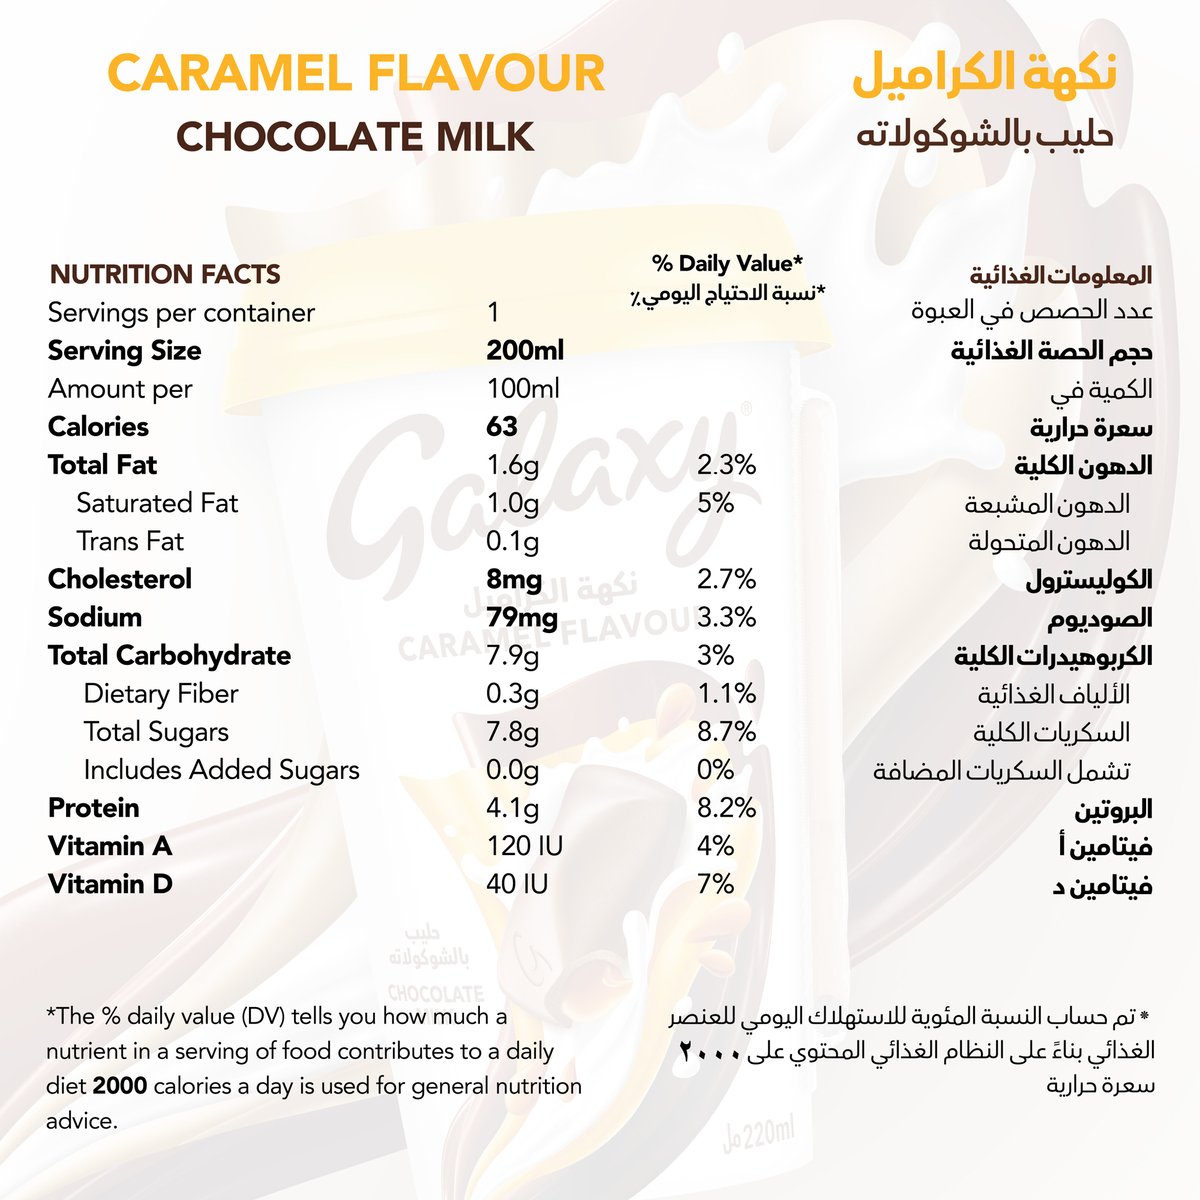 Galaxy Chocolate Milk Drink Caramel Flavour 220 ml